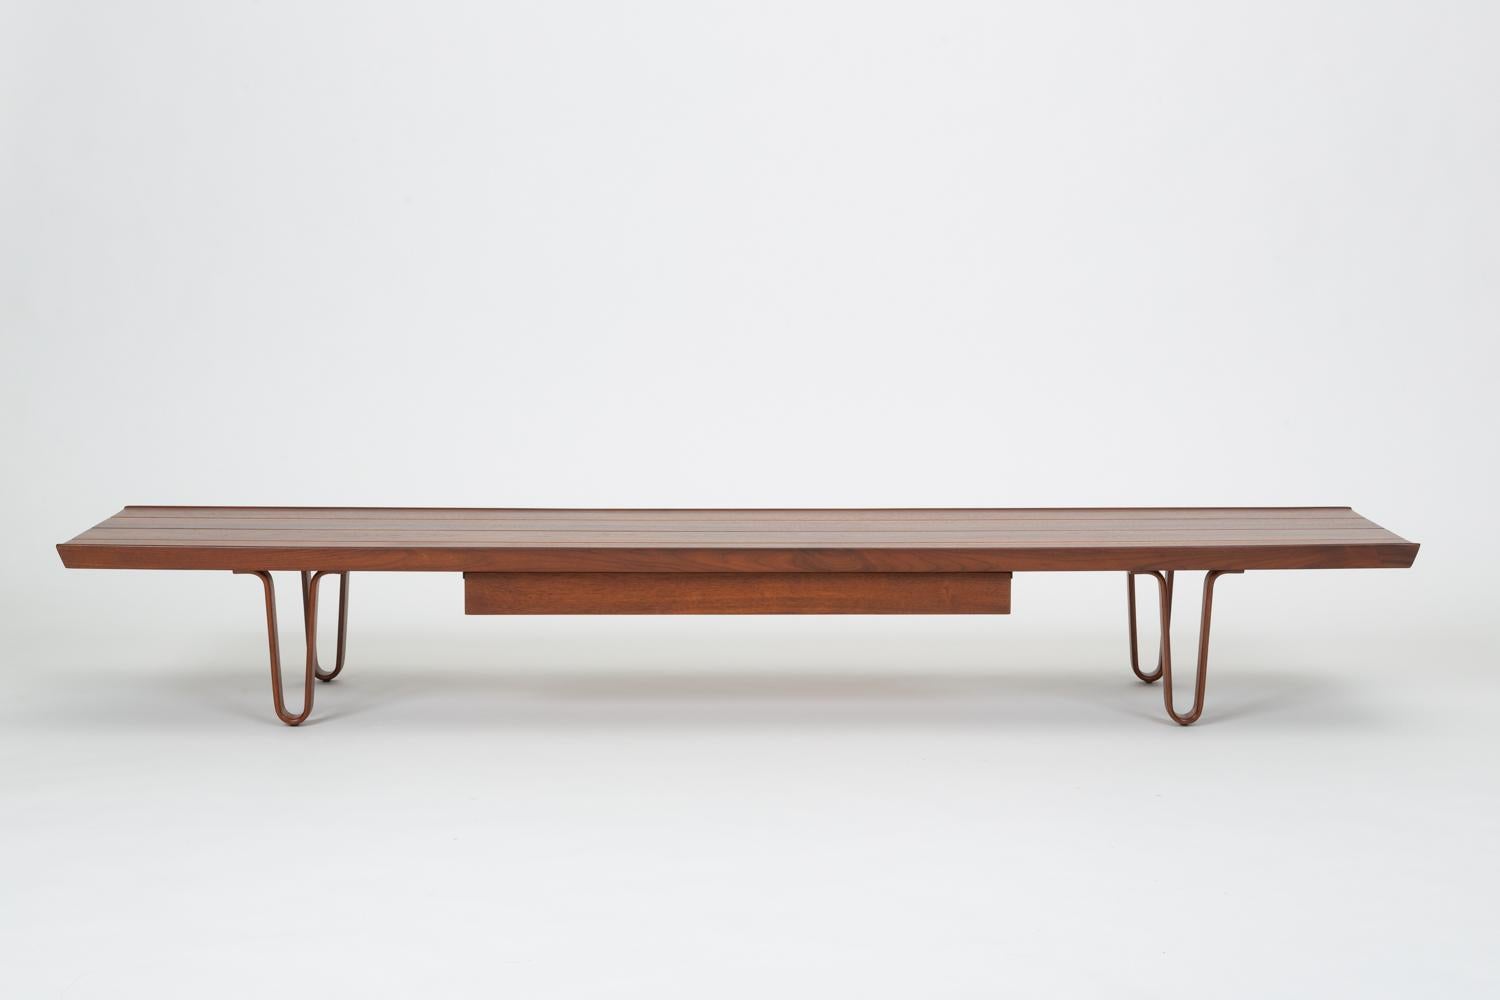 American Walnut “Long John” Bench or Coffee Table by Edward Wormley for Dunbar